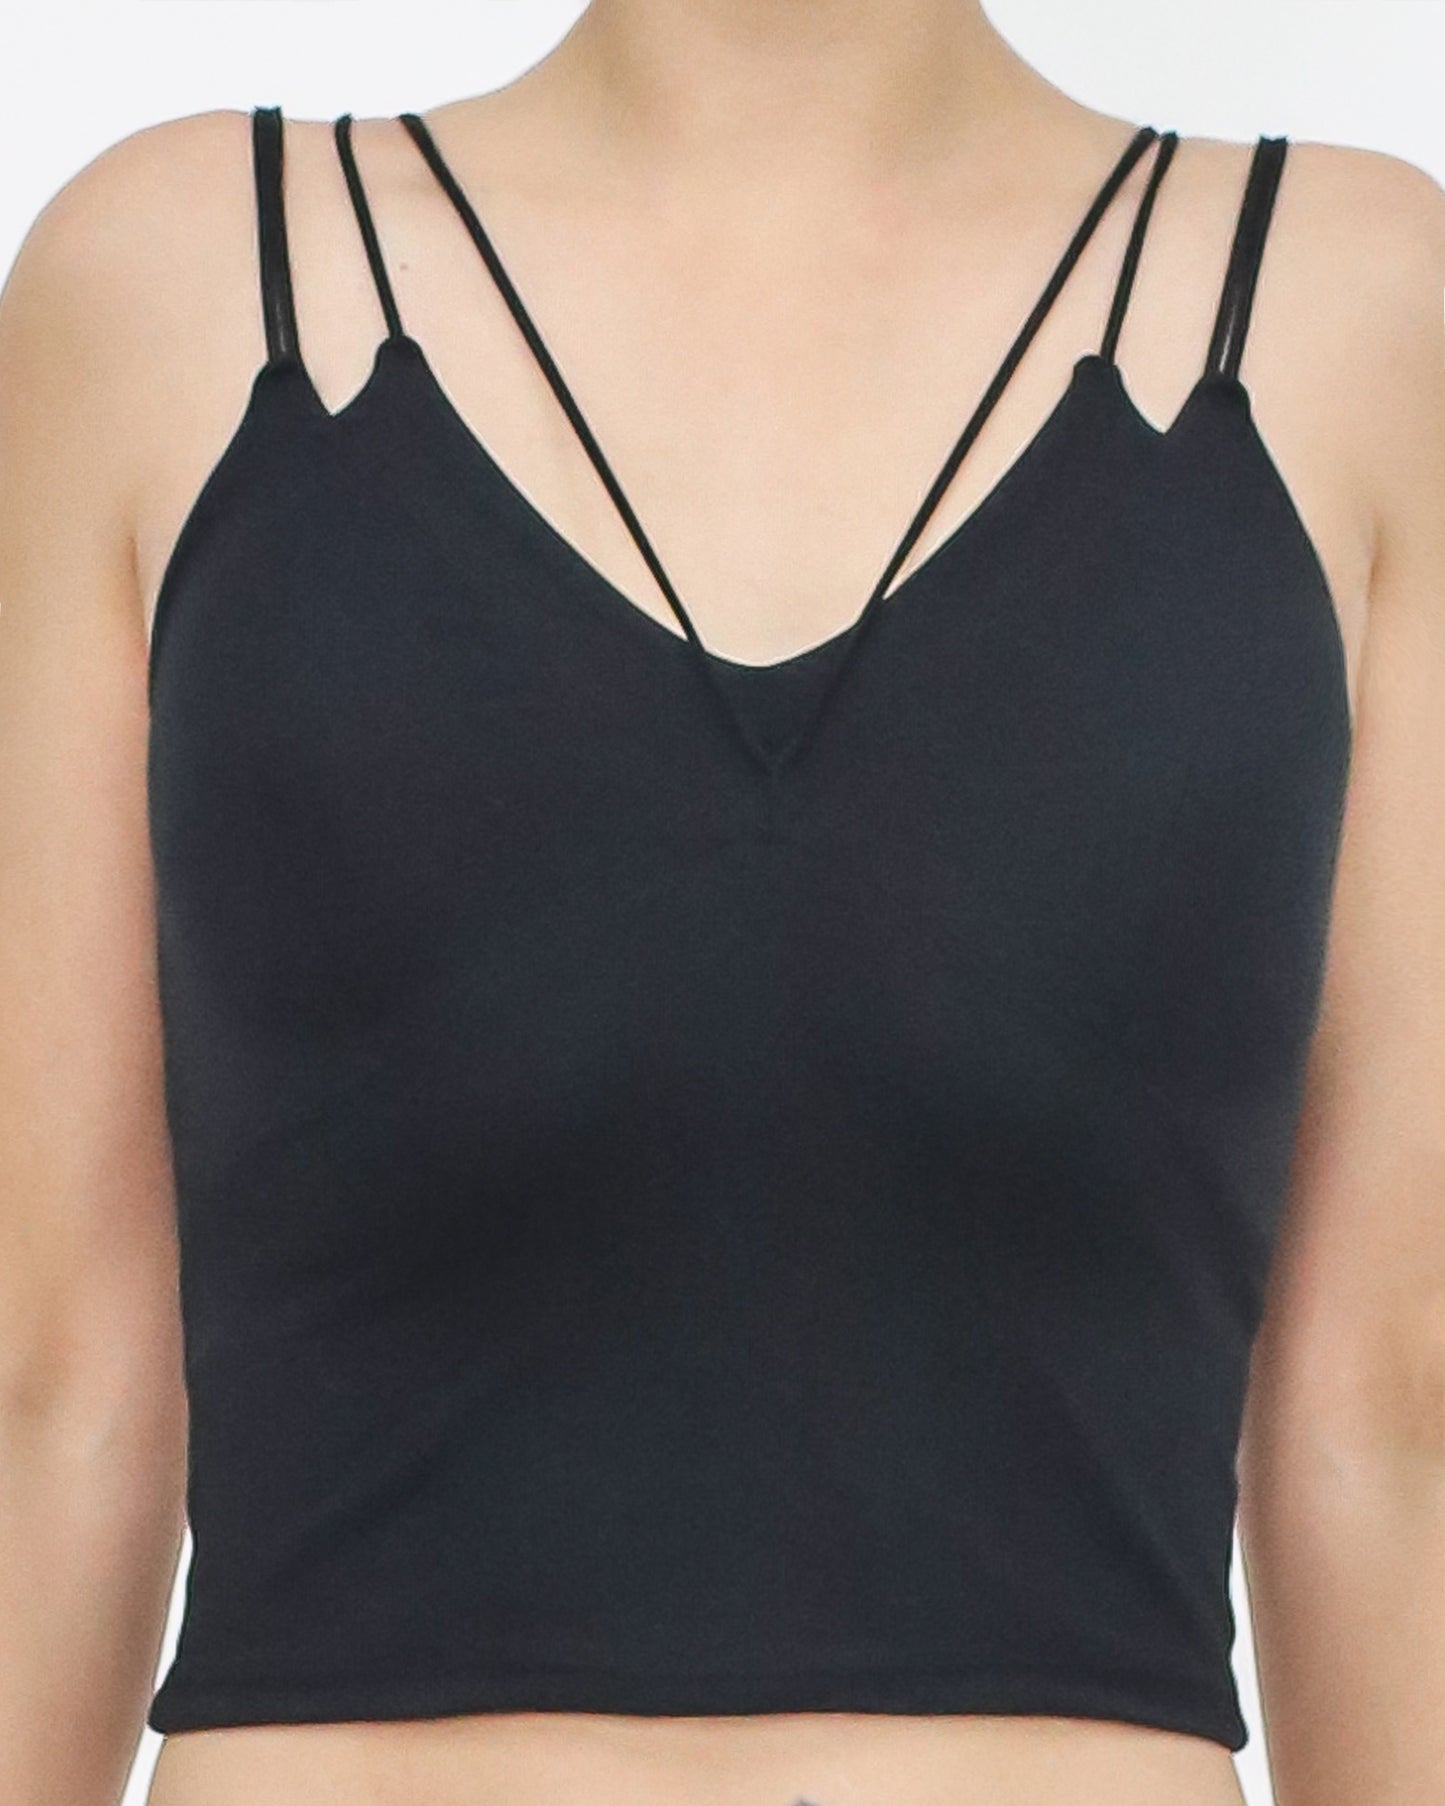 black strappy cropped bra top *pre-order*